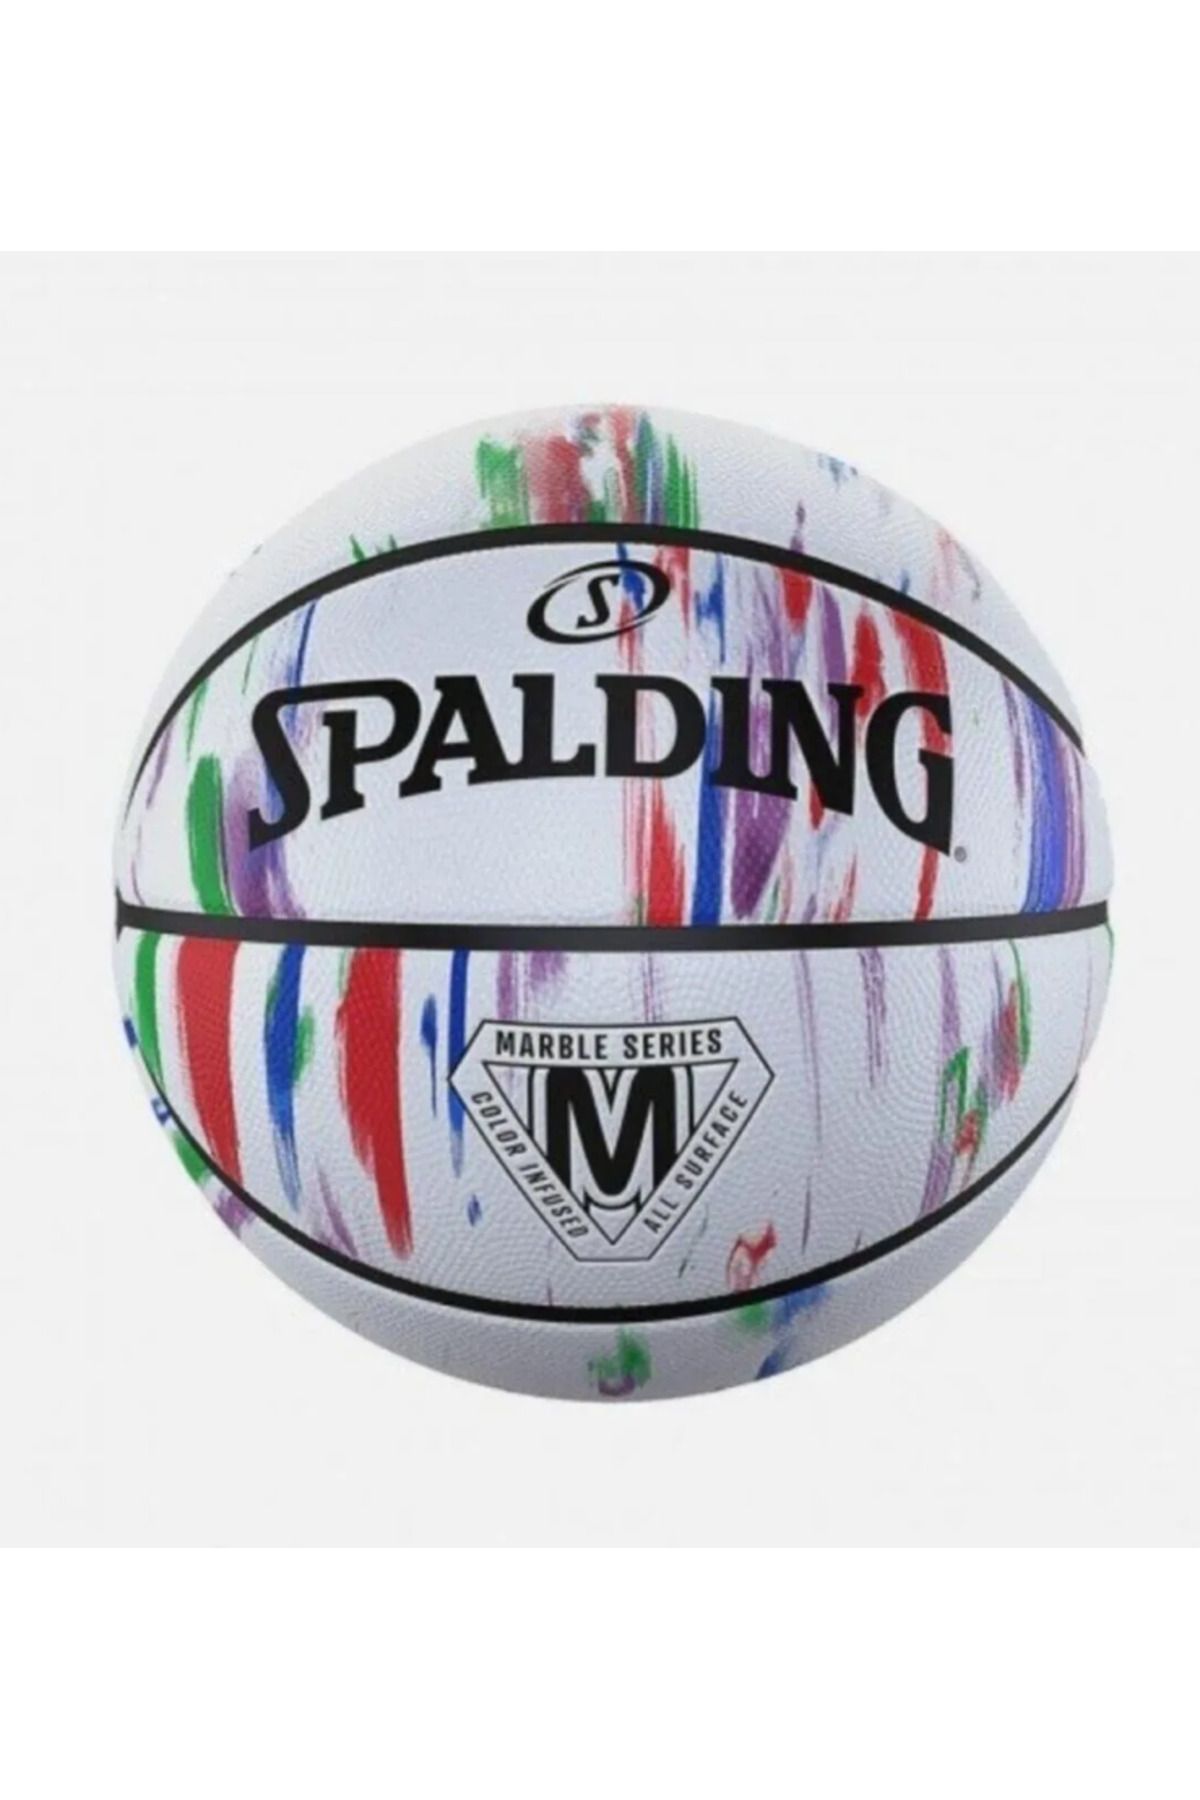 Spalding Basket Topu 2021 Marble Series Rainbow (84397Z)